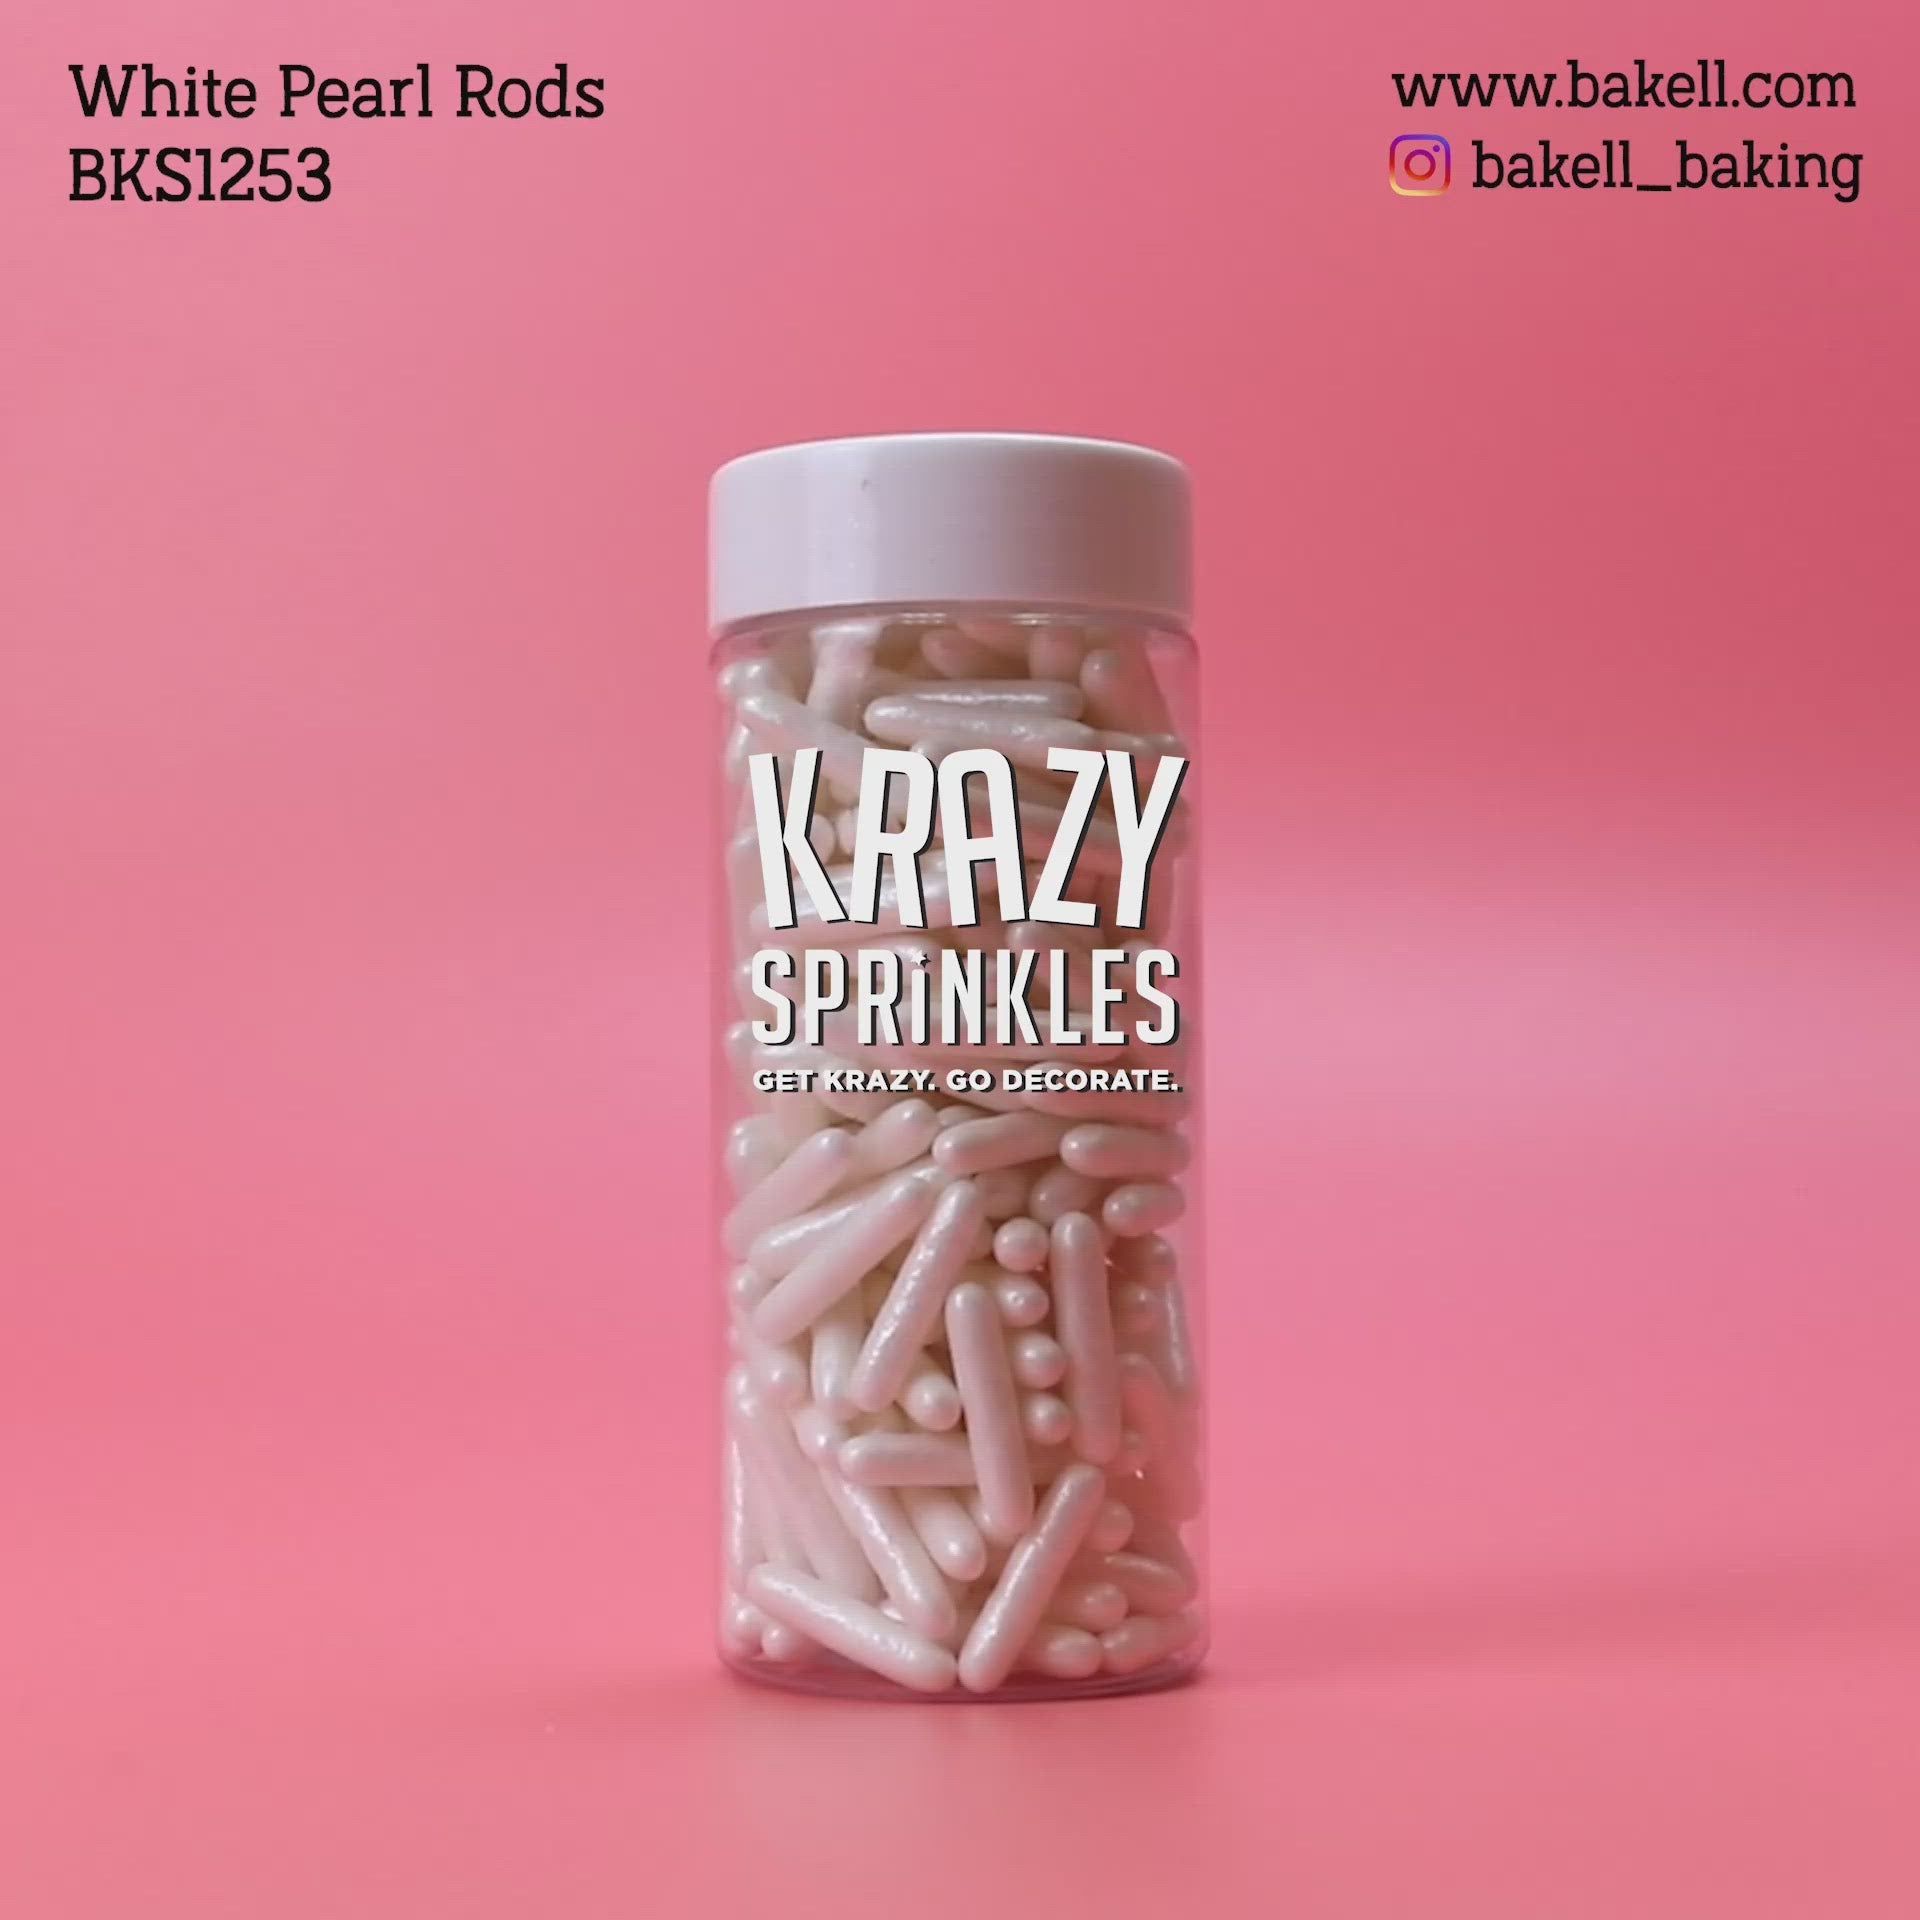 White Pearl Rods Sprinkles